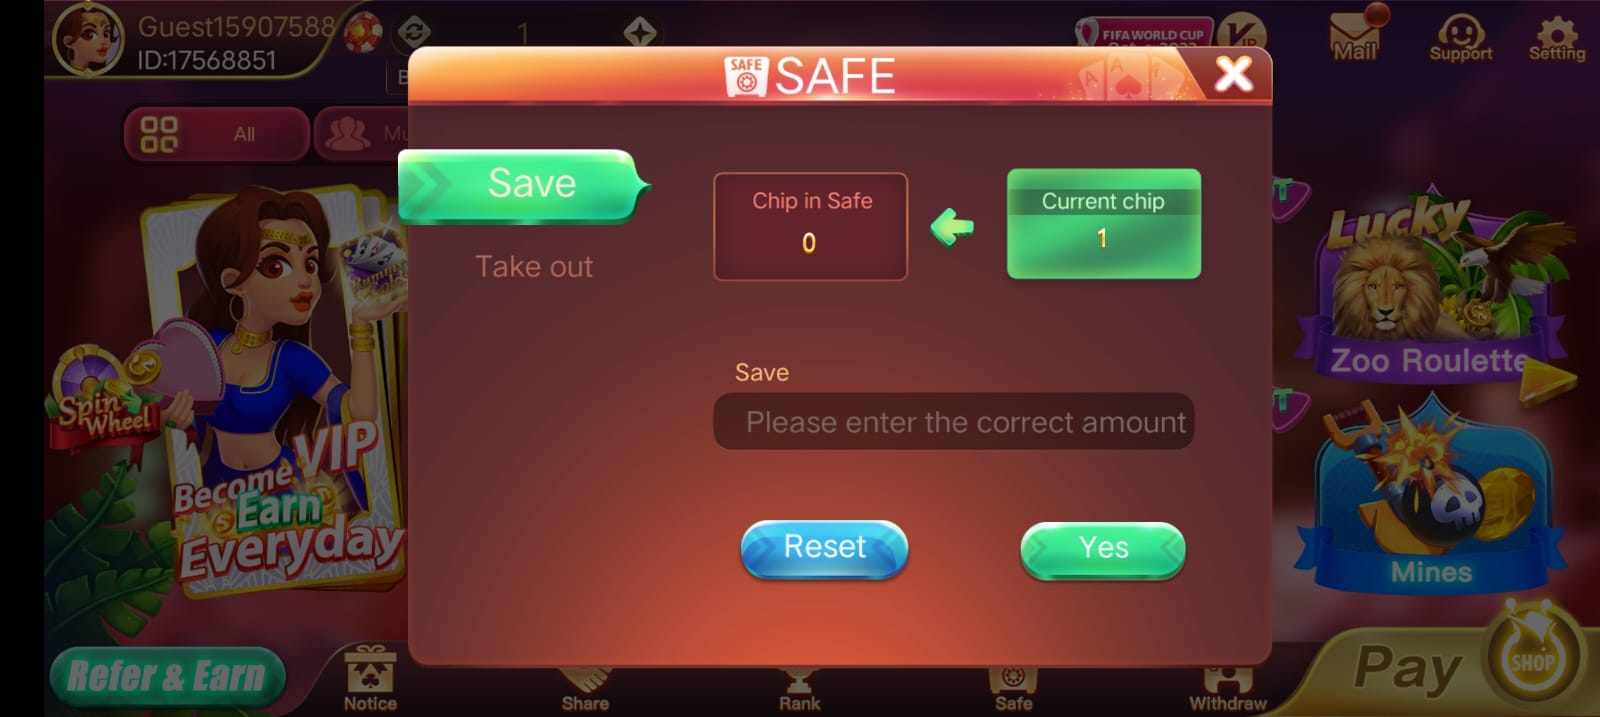 Safe Button Program In "Rummy Golds App''